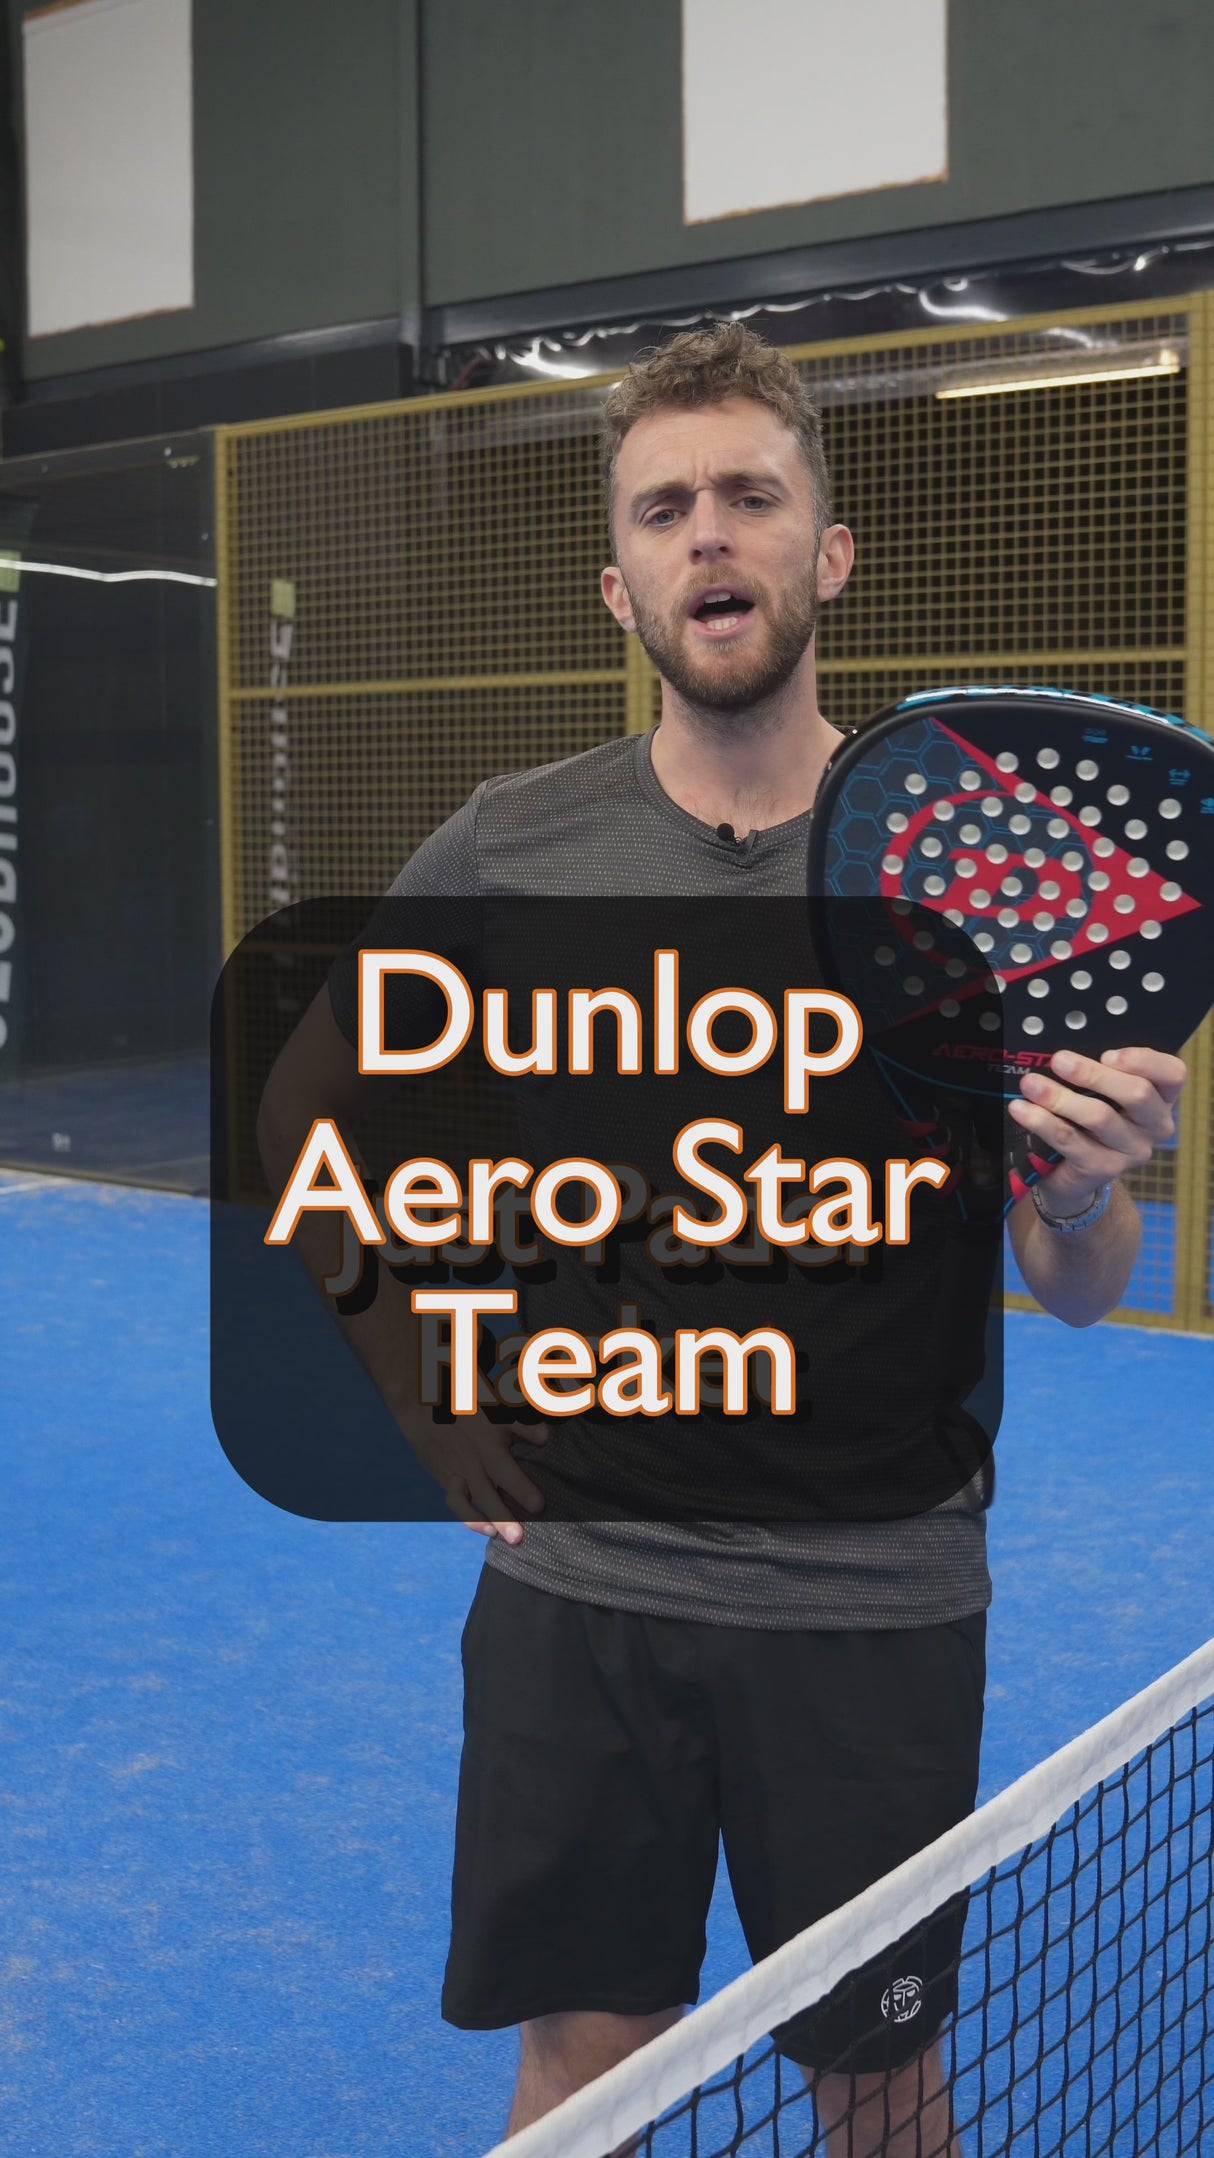 Dunlop Aero Star Team